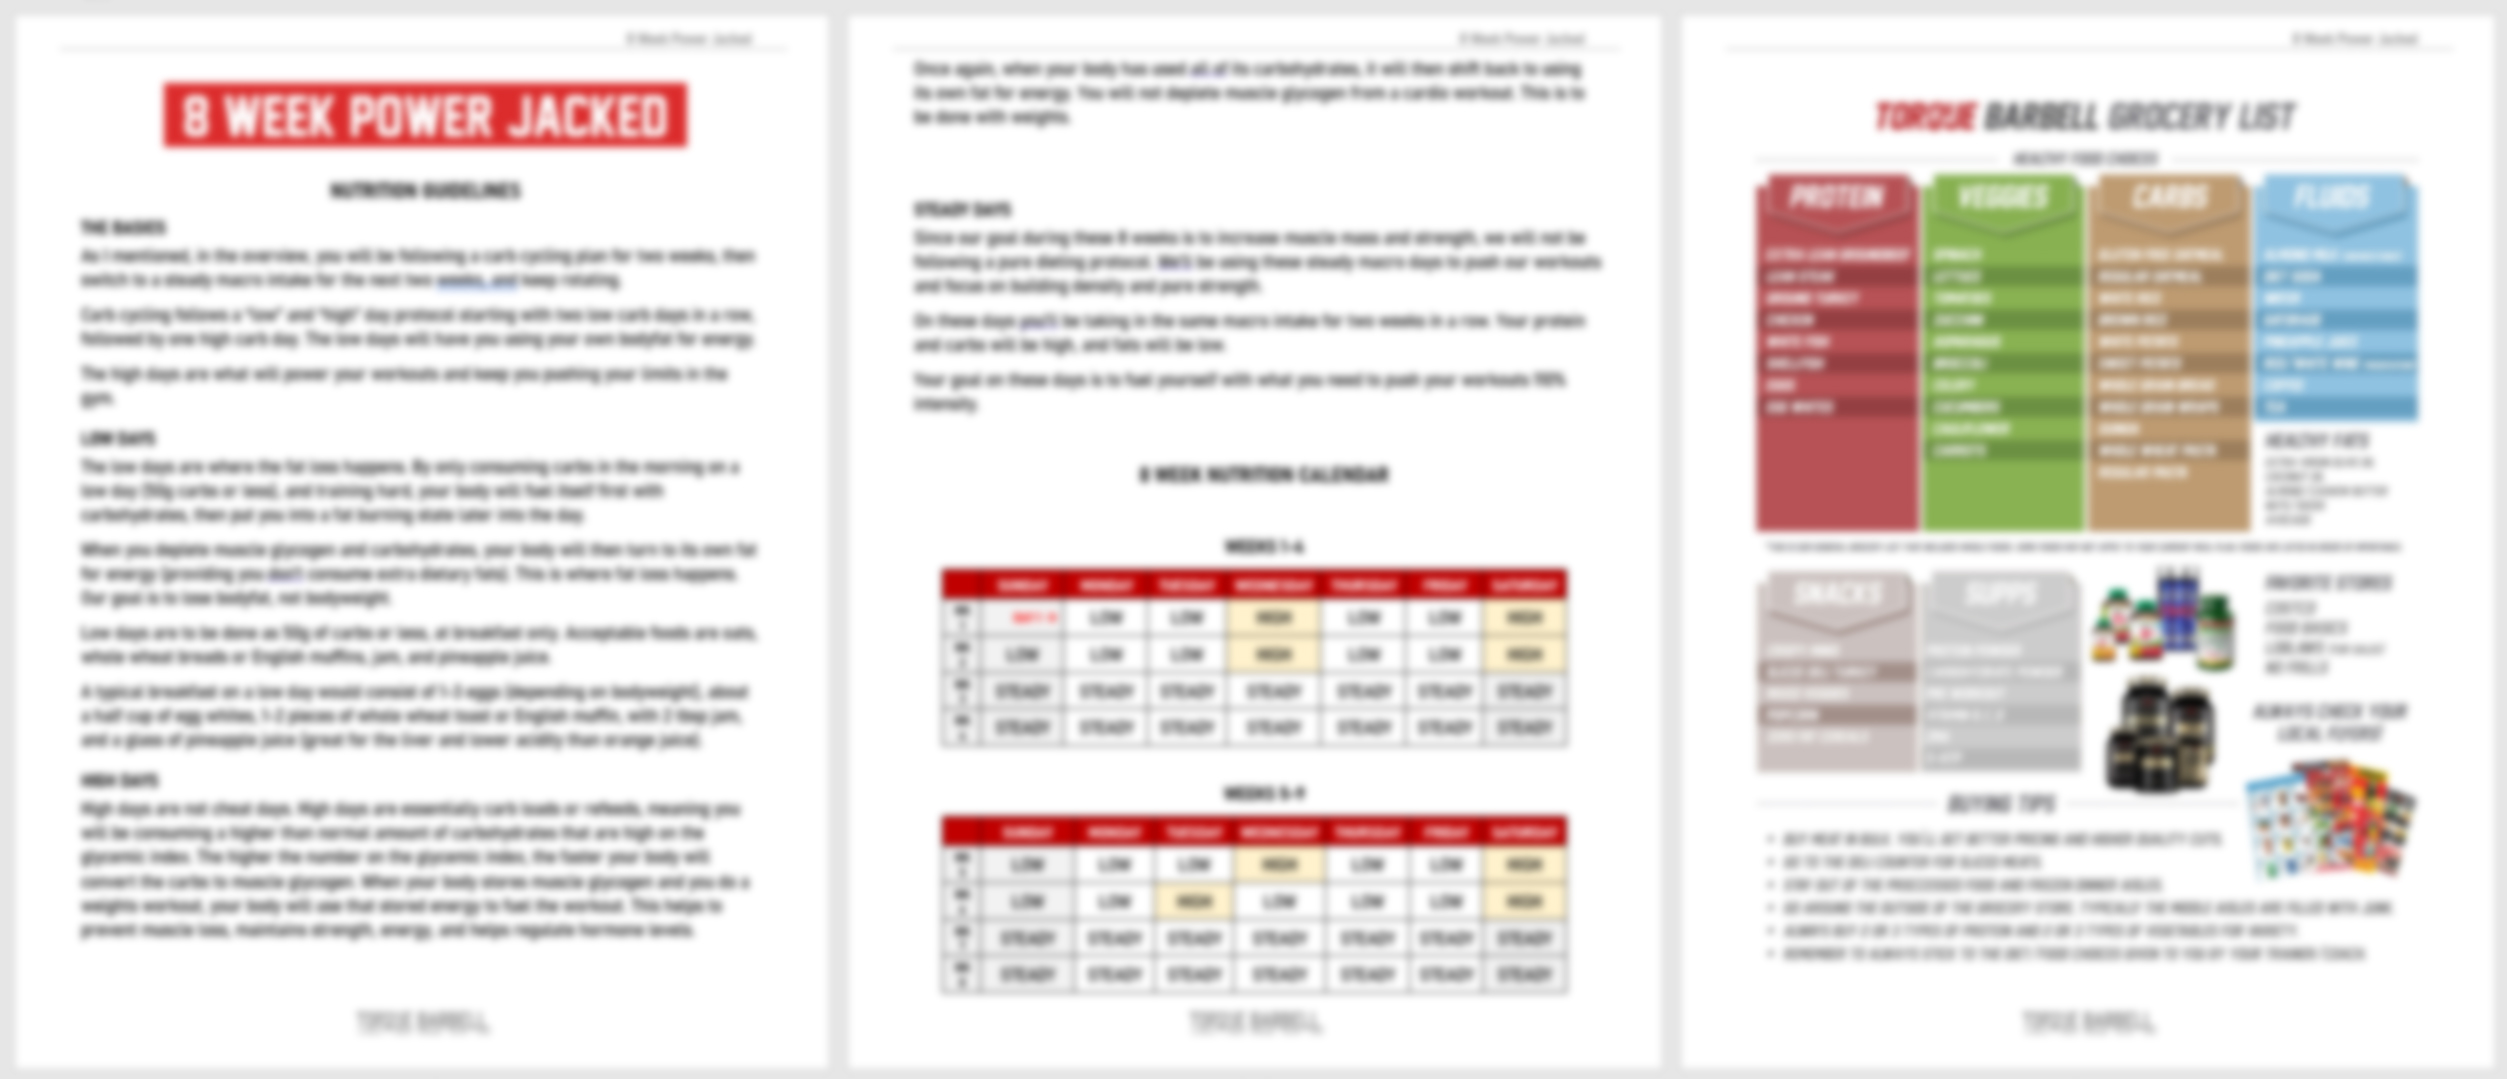 12 week shred program pdf download